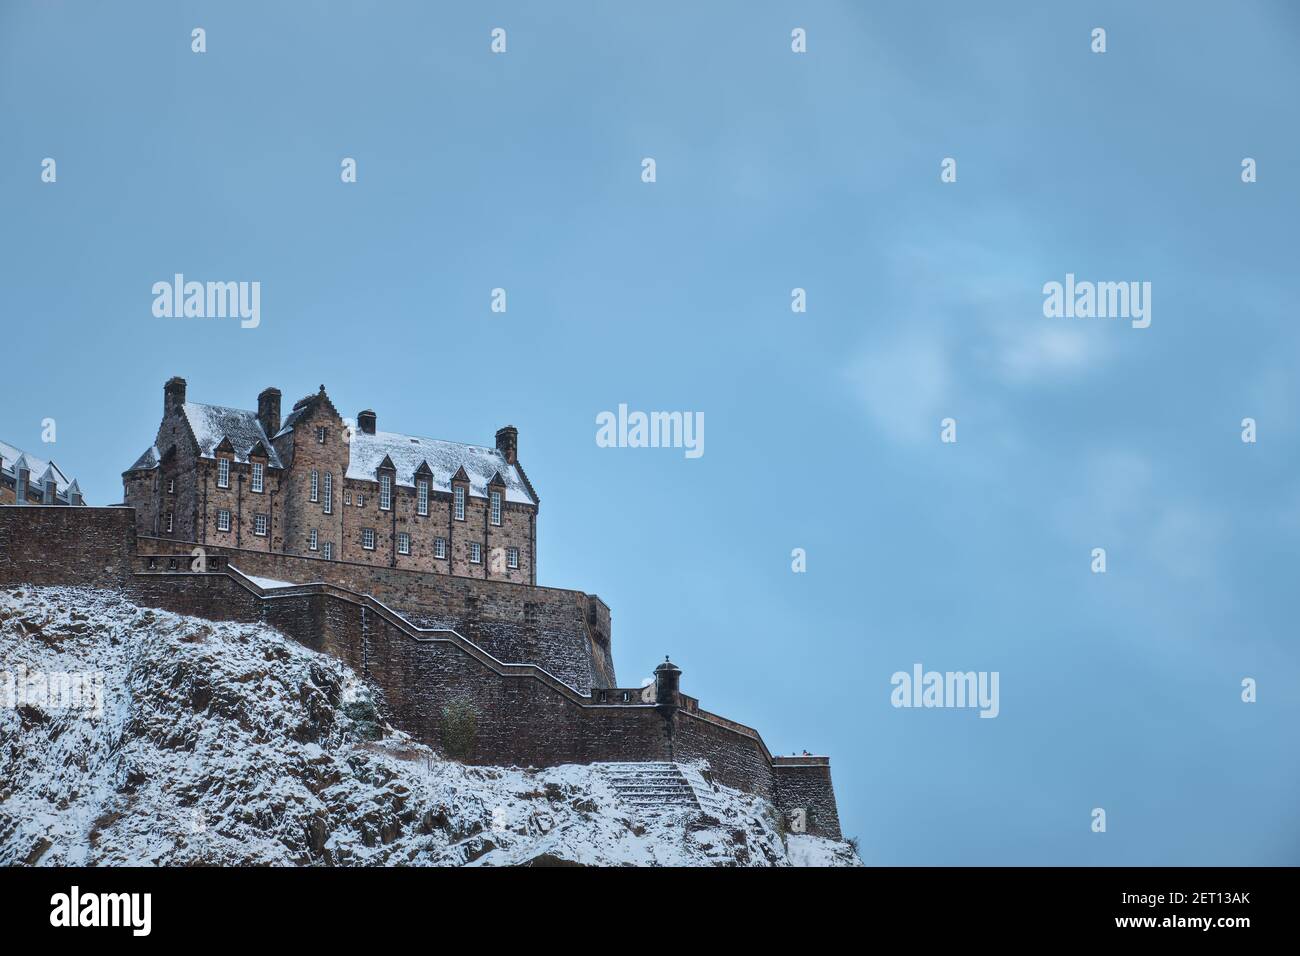 Old Scottish castle on a rock covered with snow in winter. View of Edinburgh Castle, Edinburgh, Scotland, United Kingdom Stock Photo